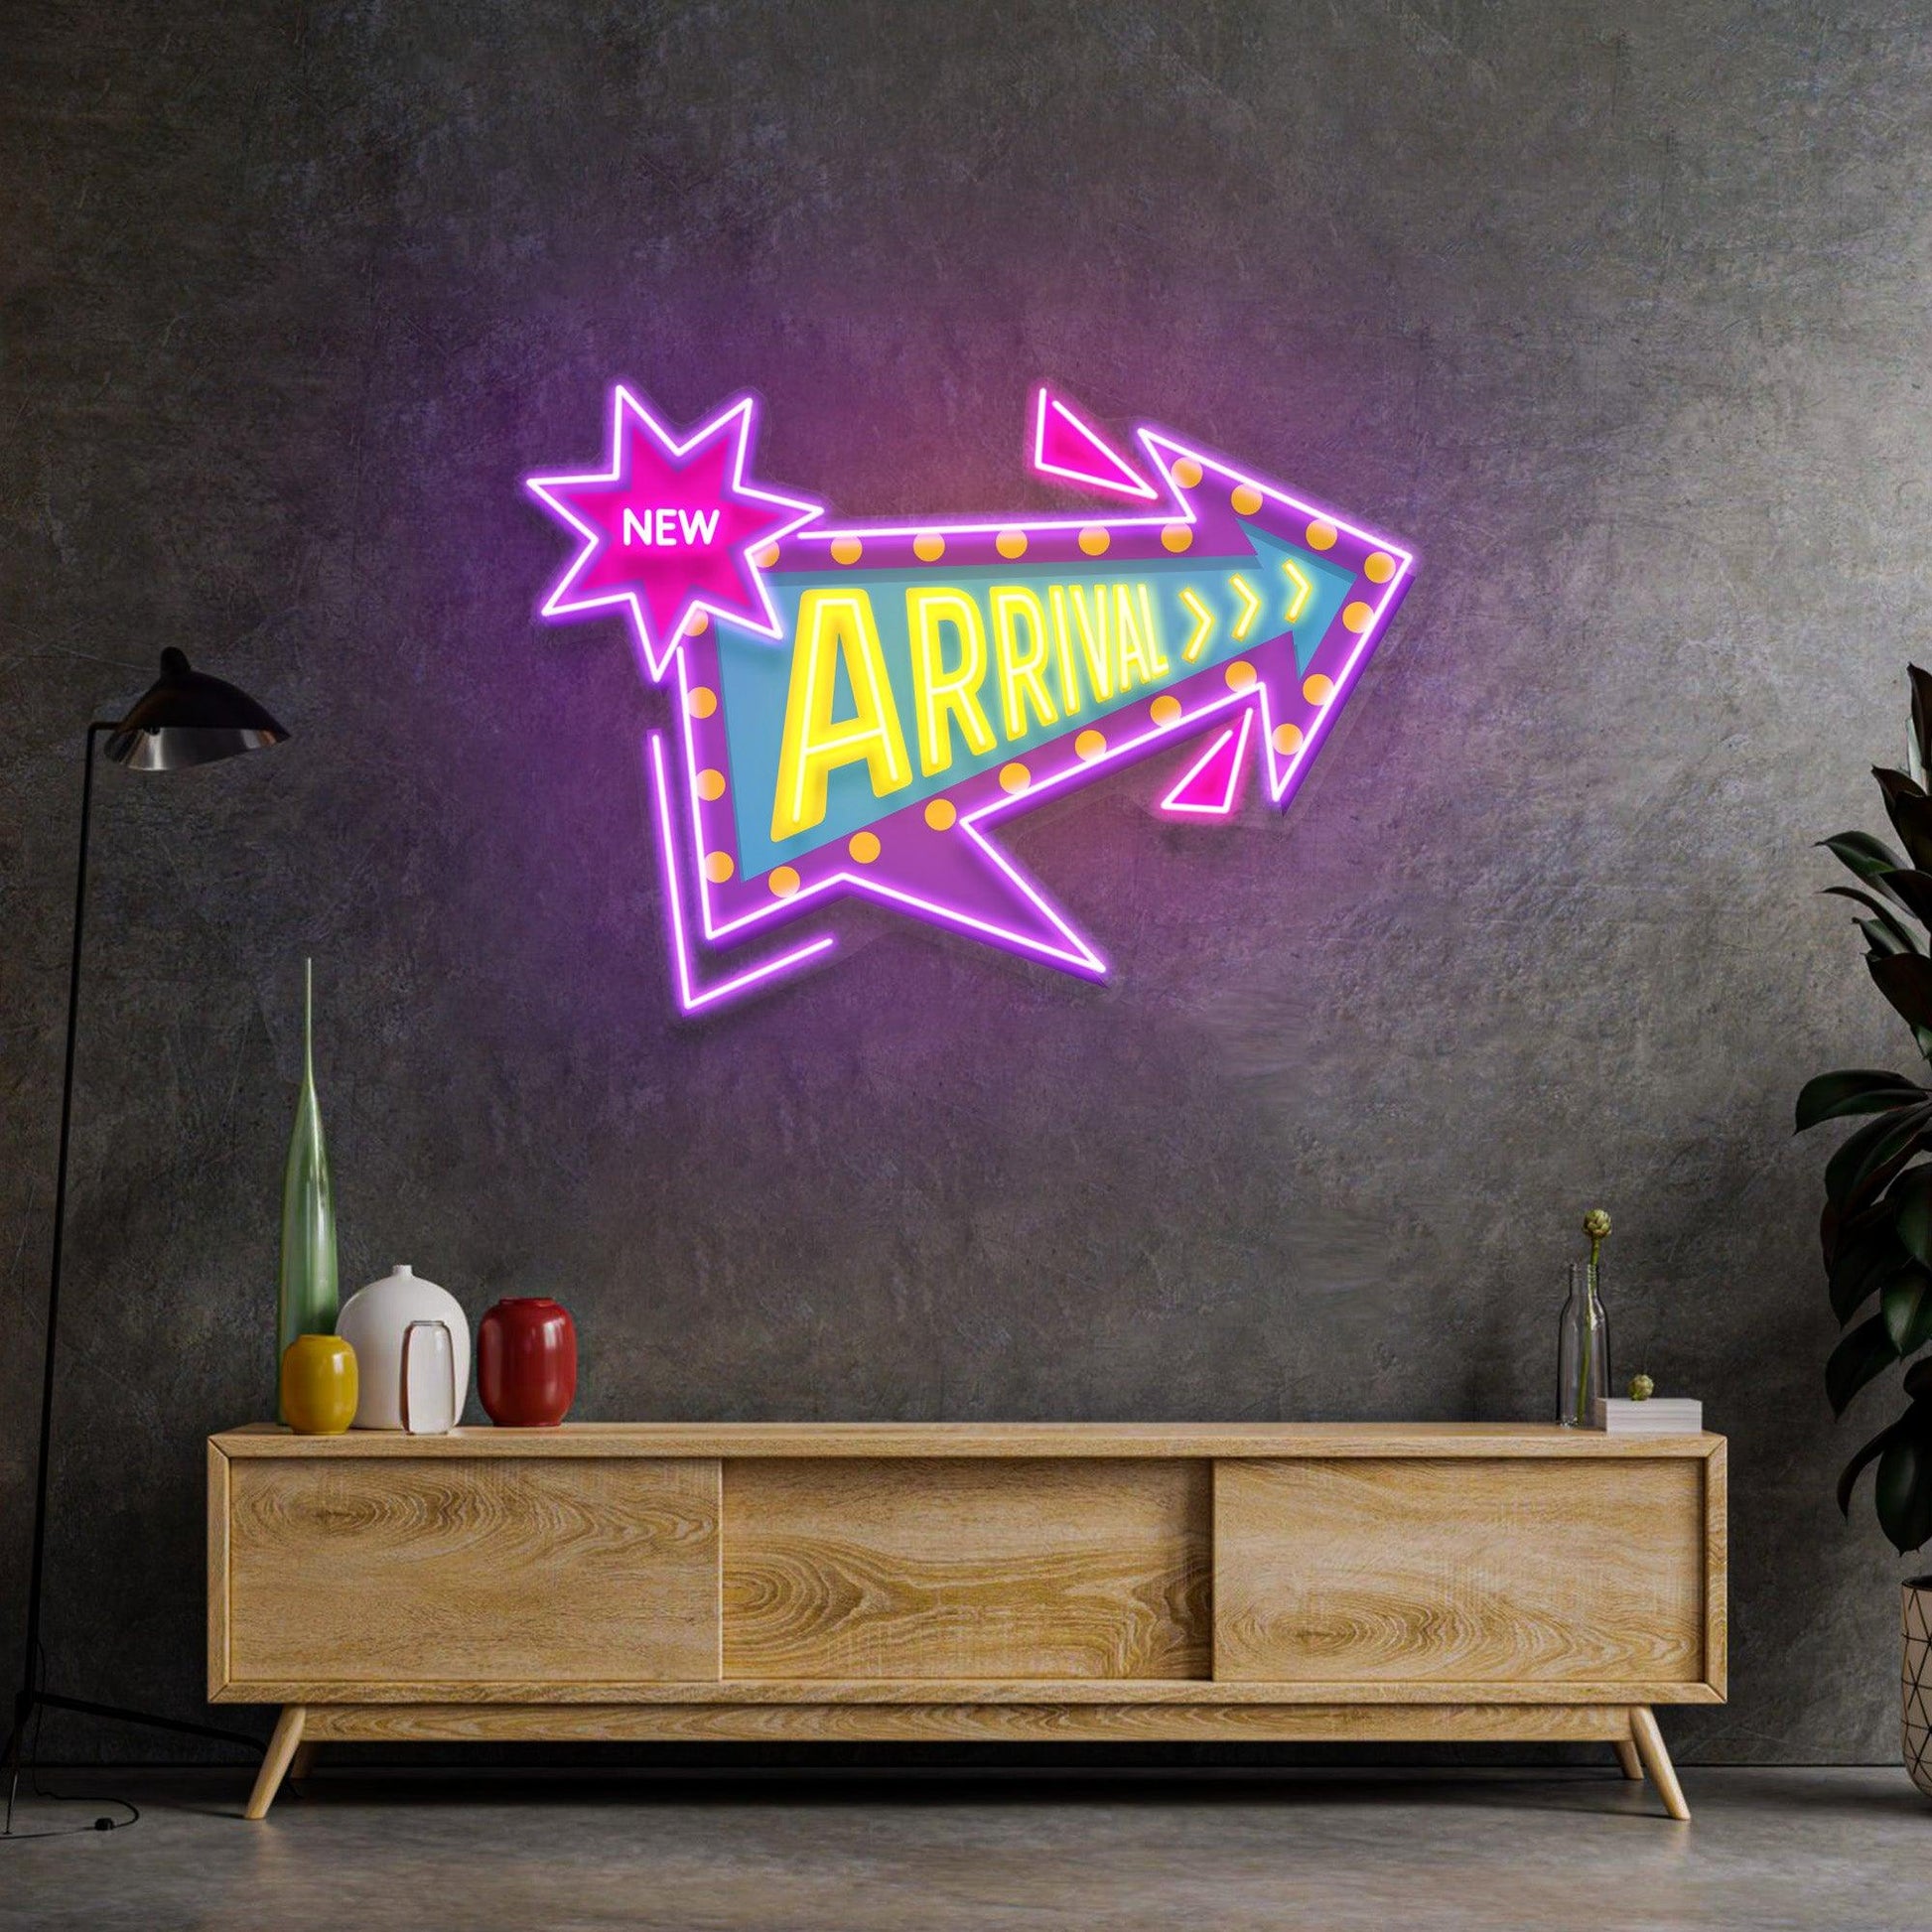 New Arrival Signs Led Neon Acrylic Artwork - Neonzastudio